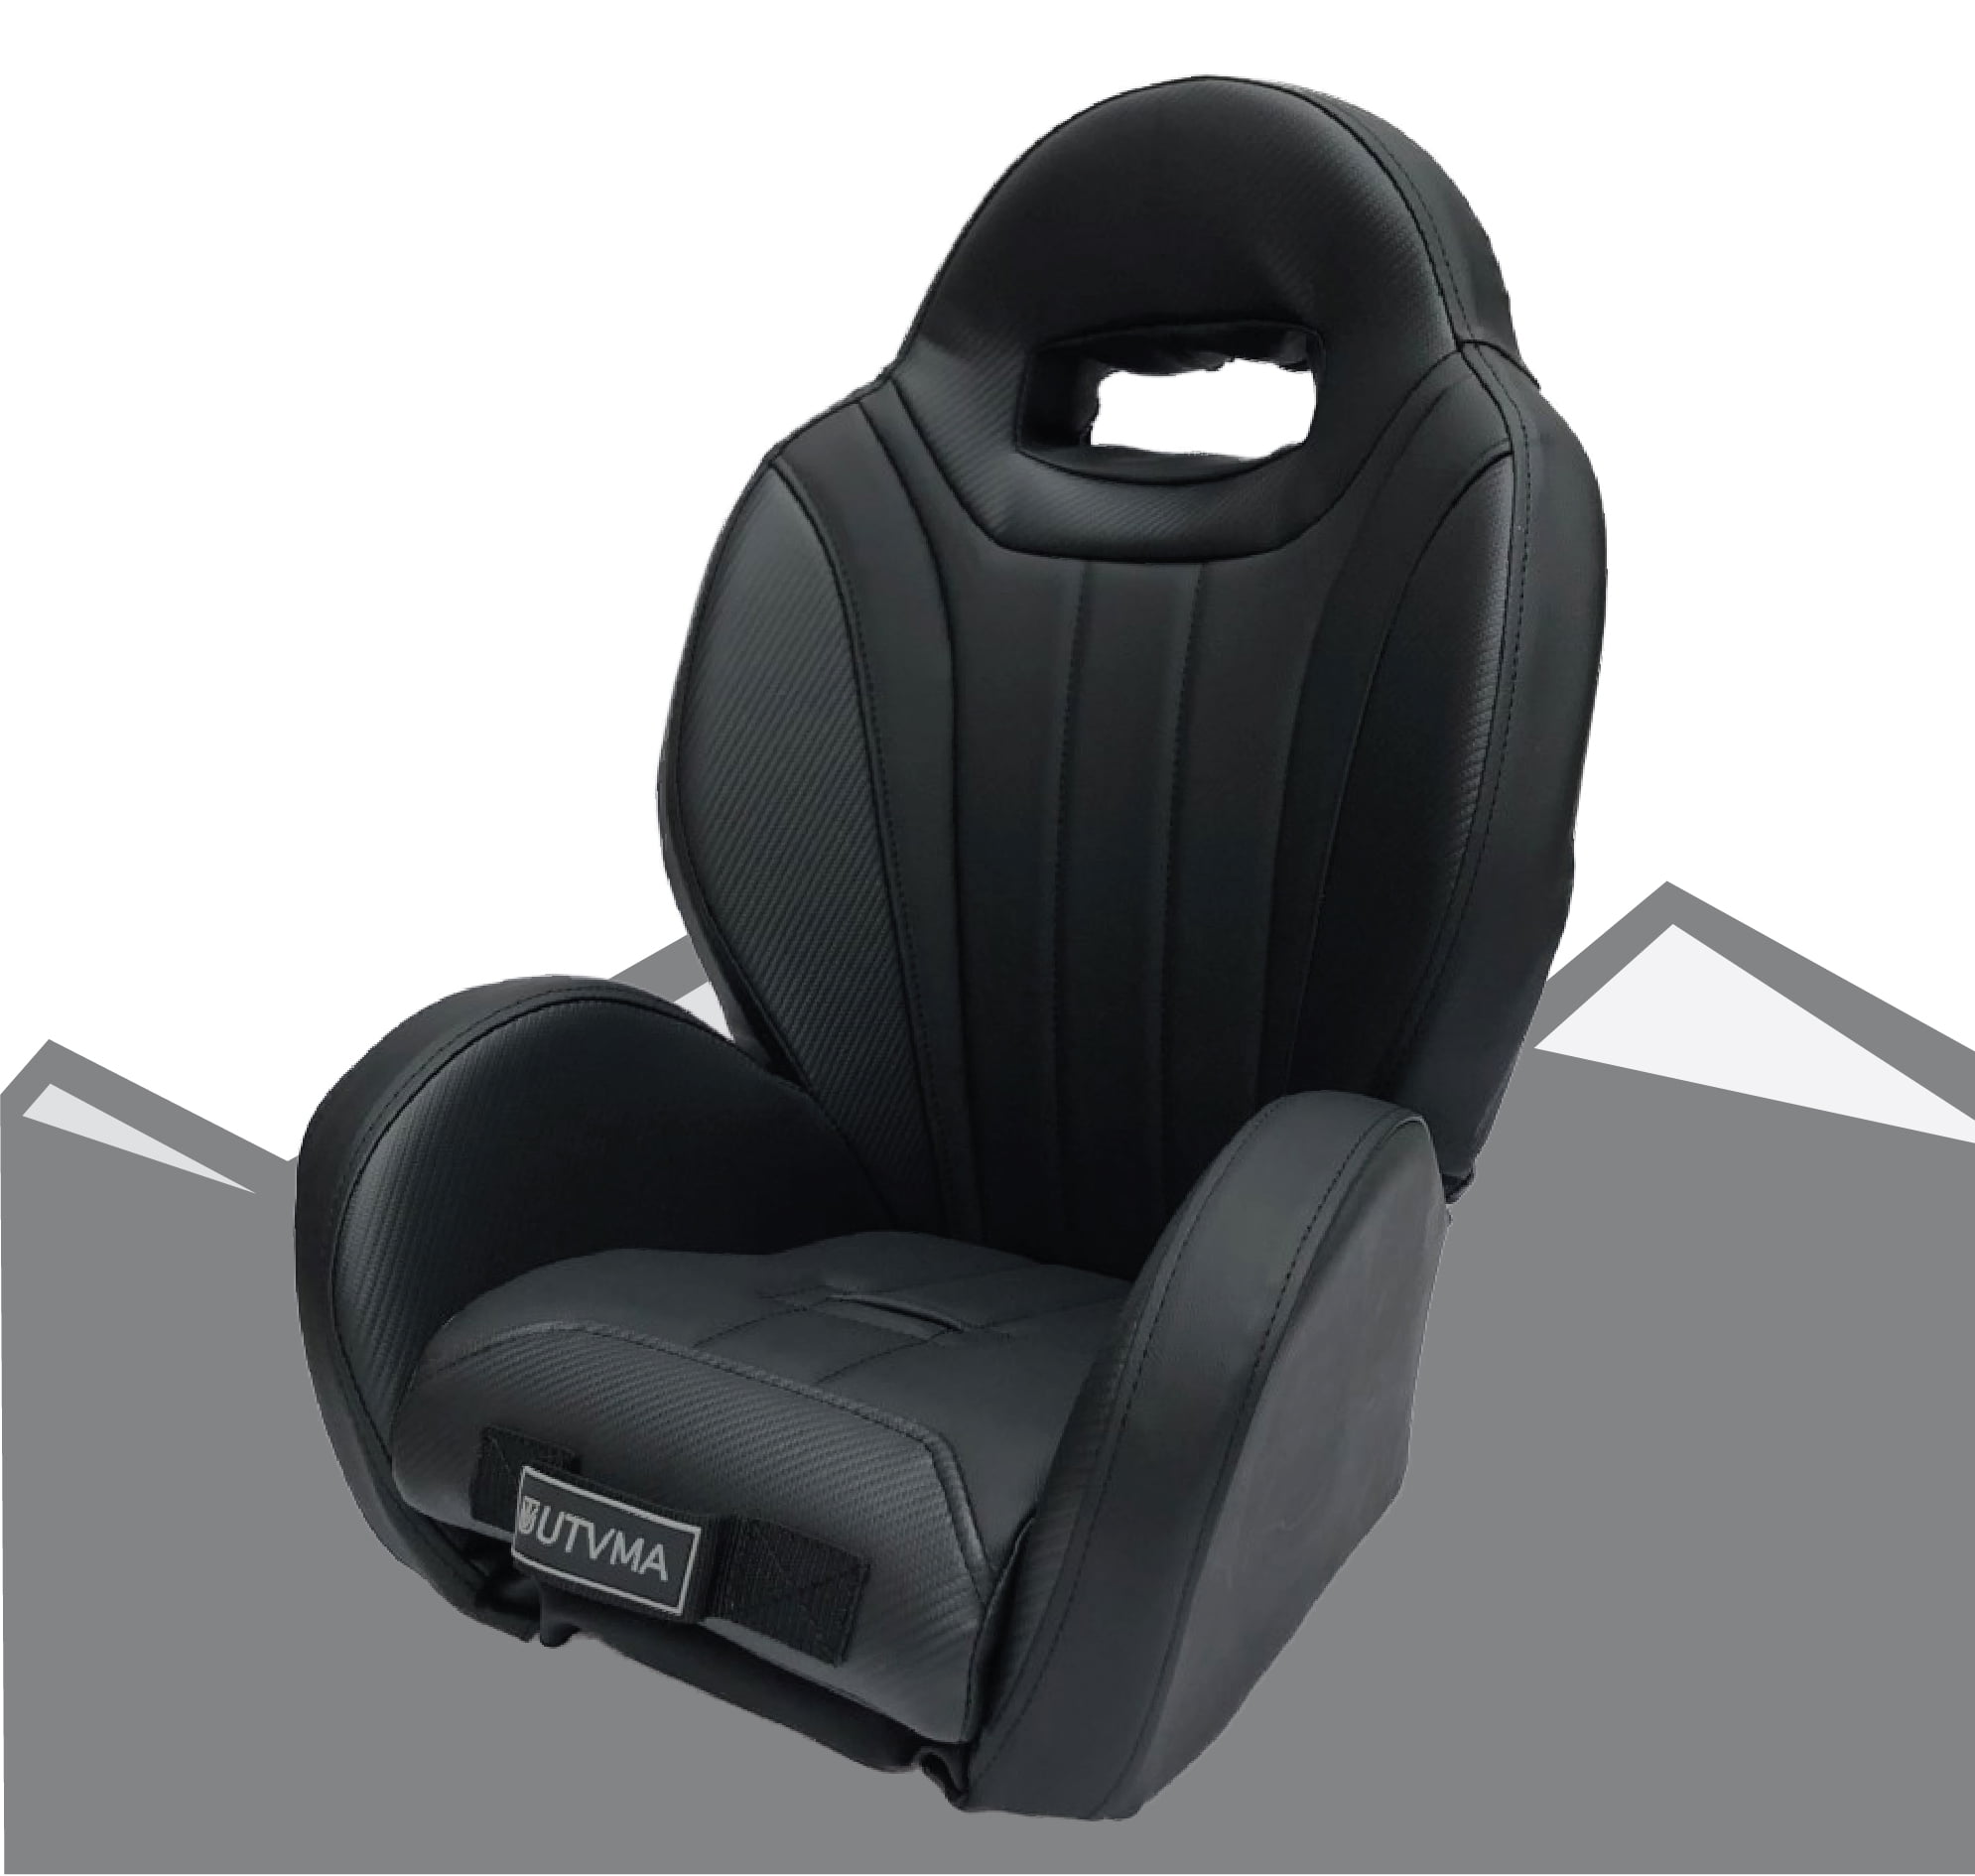  MotoSeat Polaris Sportsman seat foam : Automotive